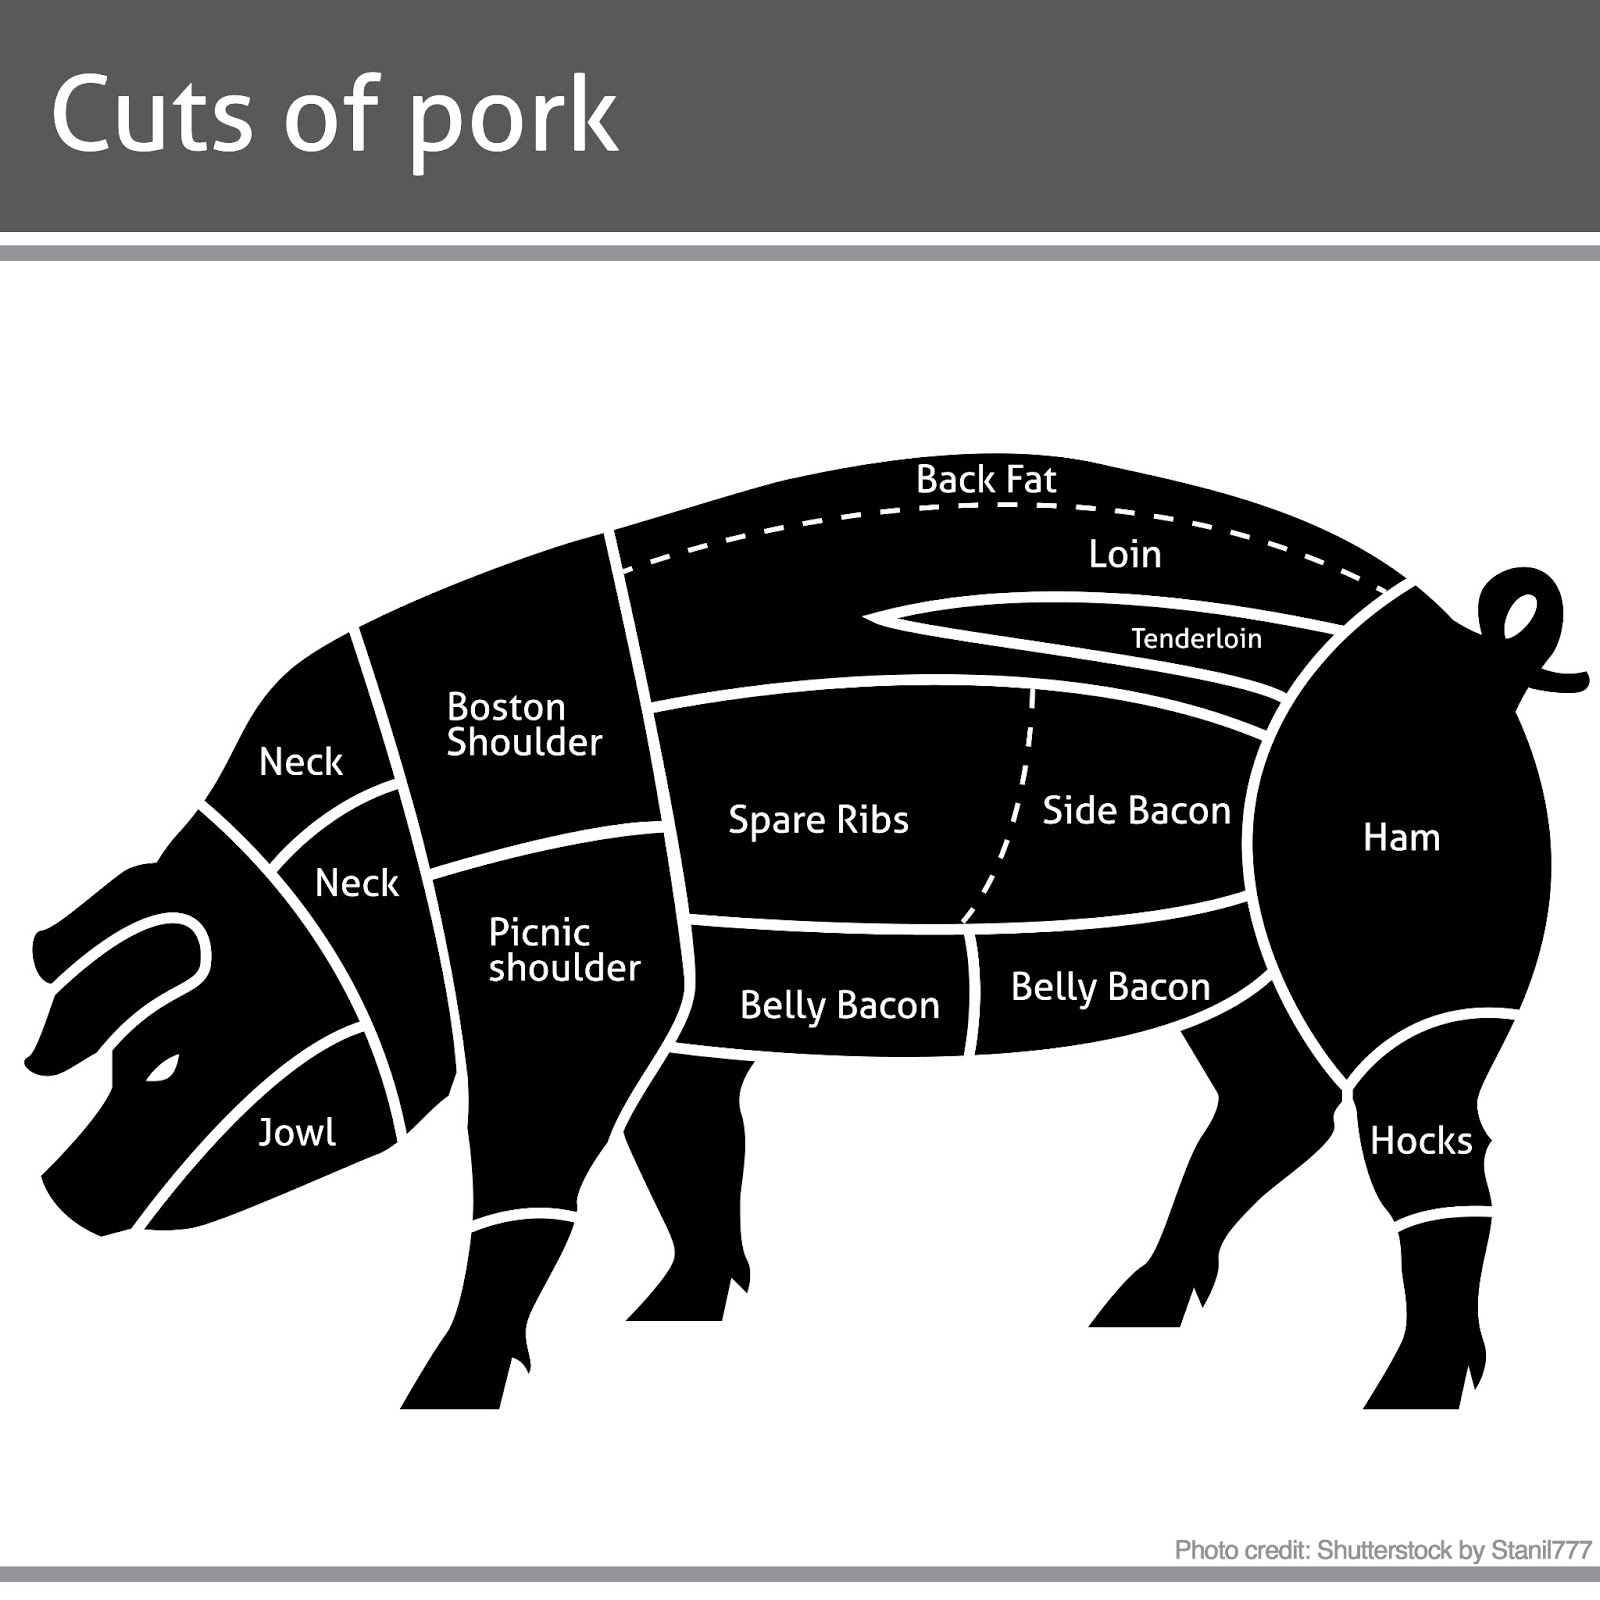 Cuts of Pork | Image via Shutterstock